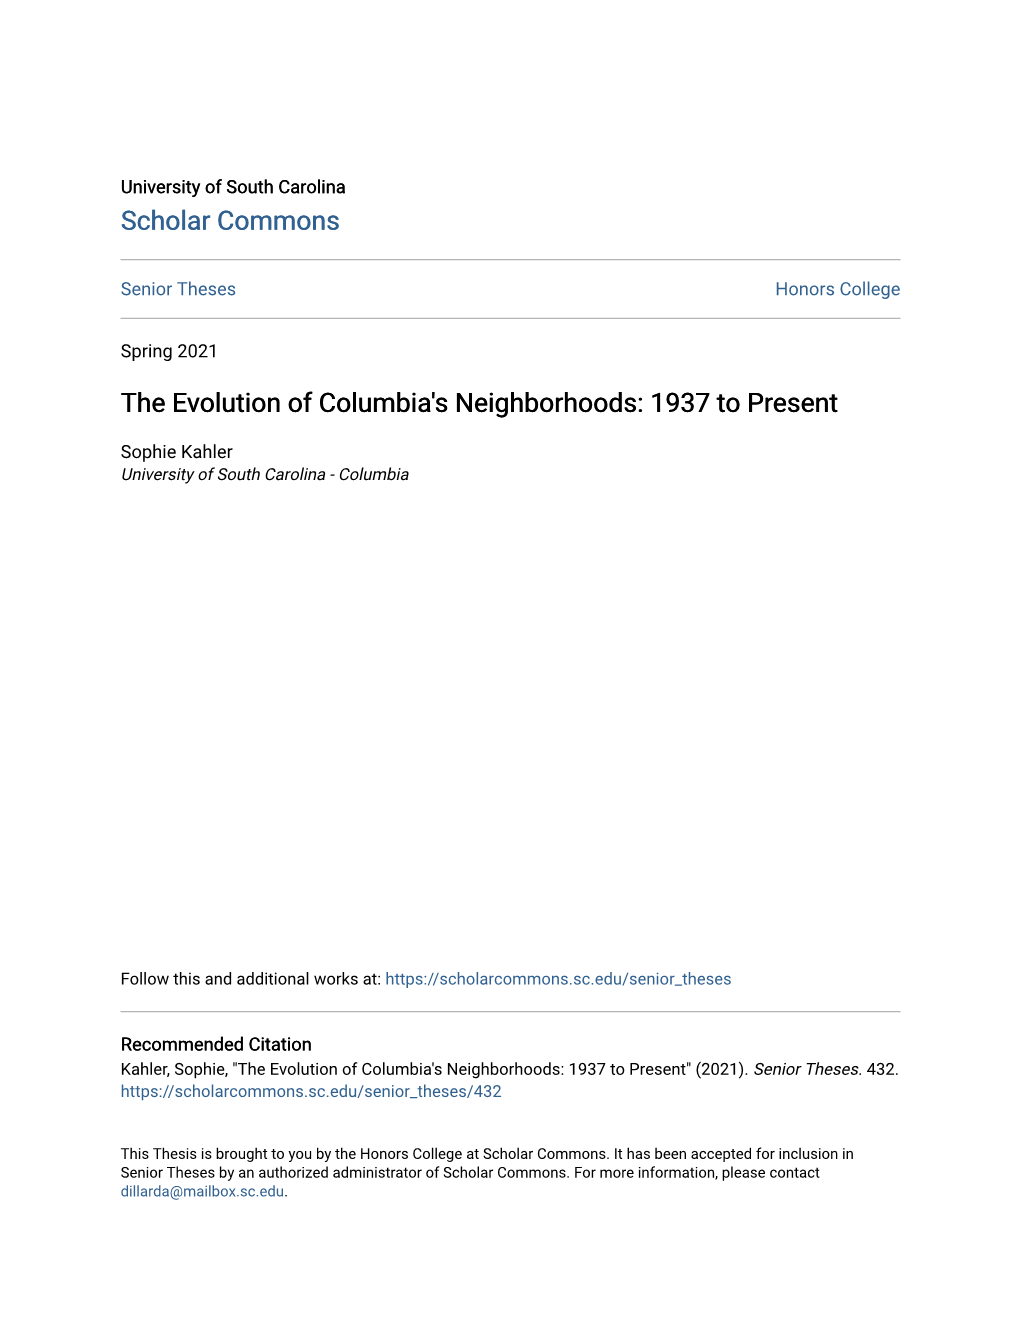 The Evolution of Columbia's Neighborhoods: 1937 to Present